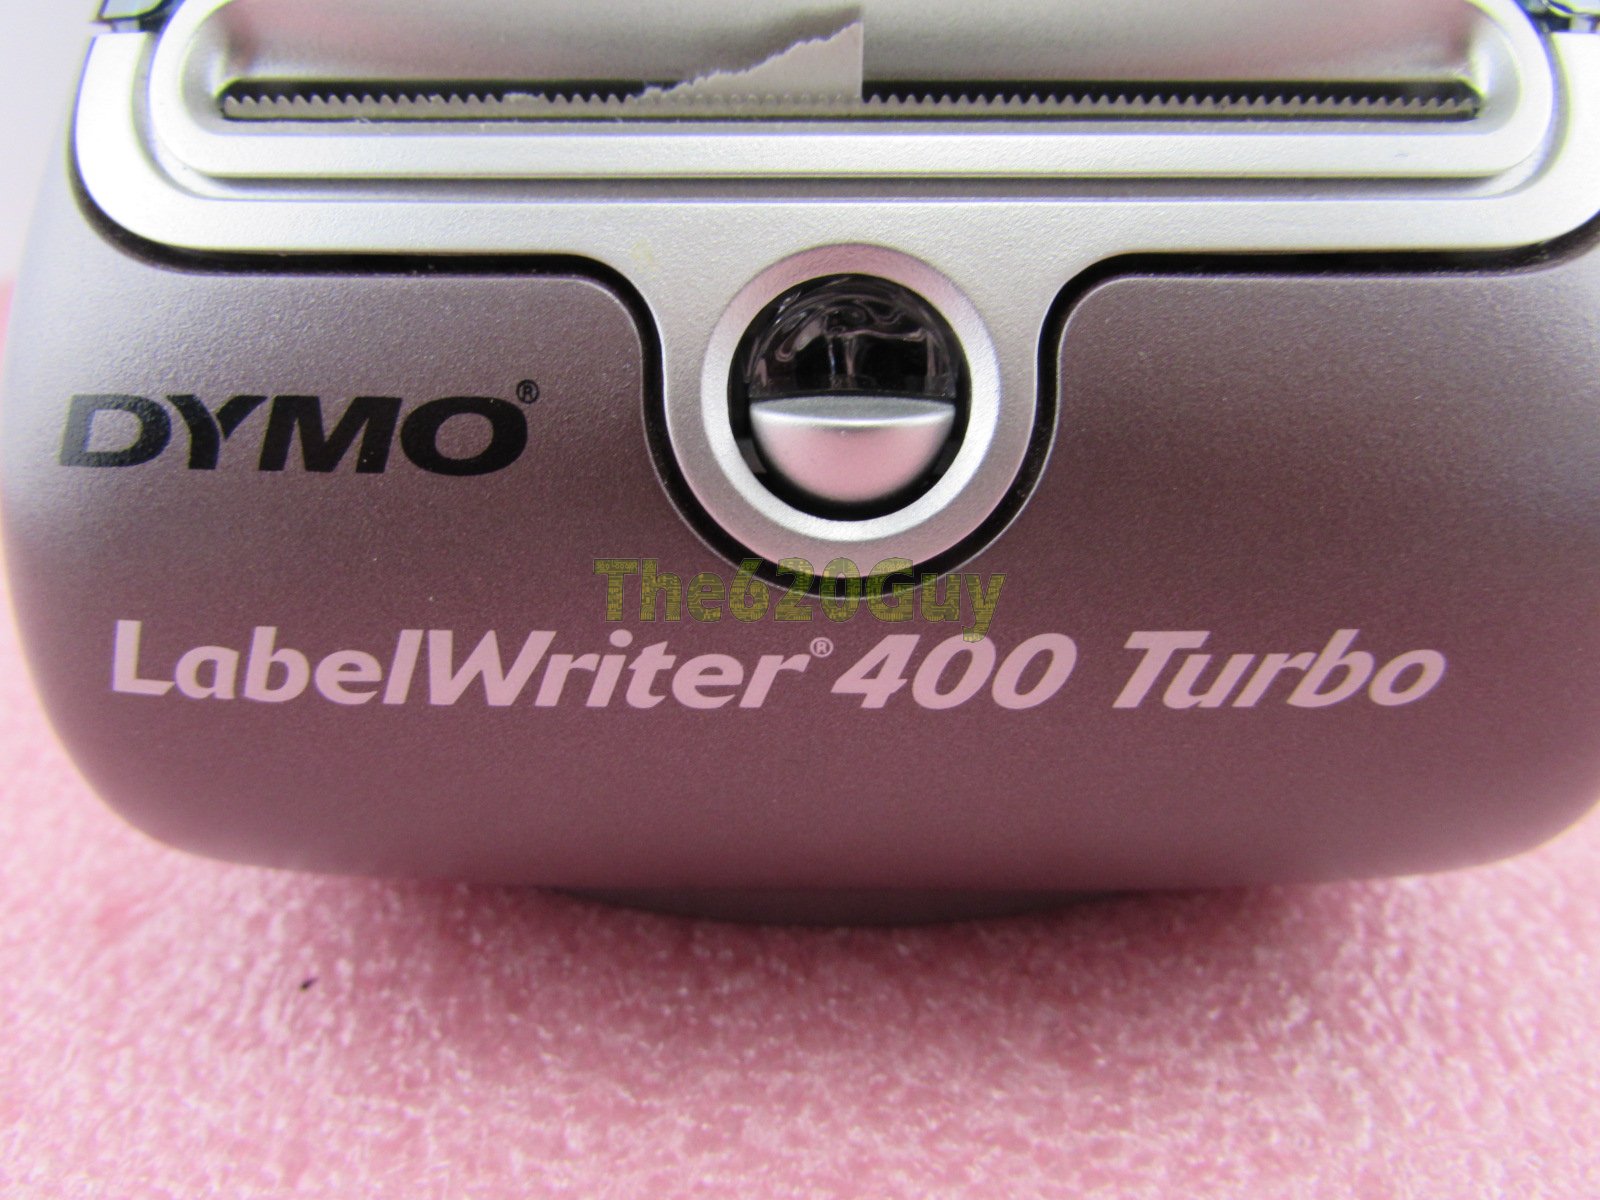 dymo labelwriter 400 driver windows 10